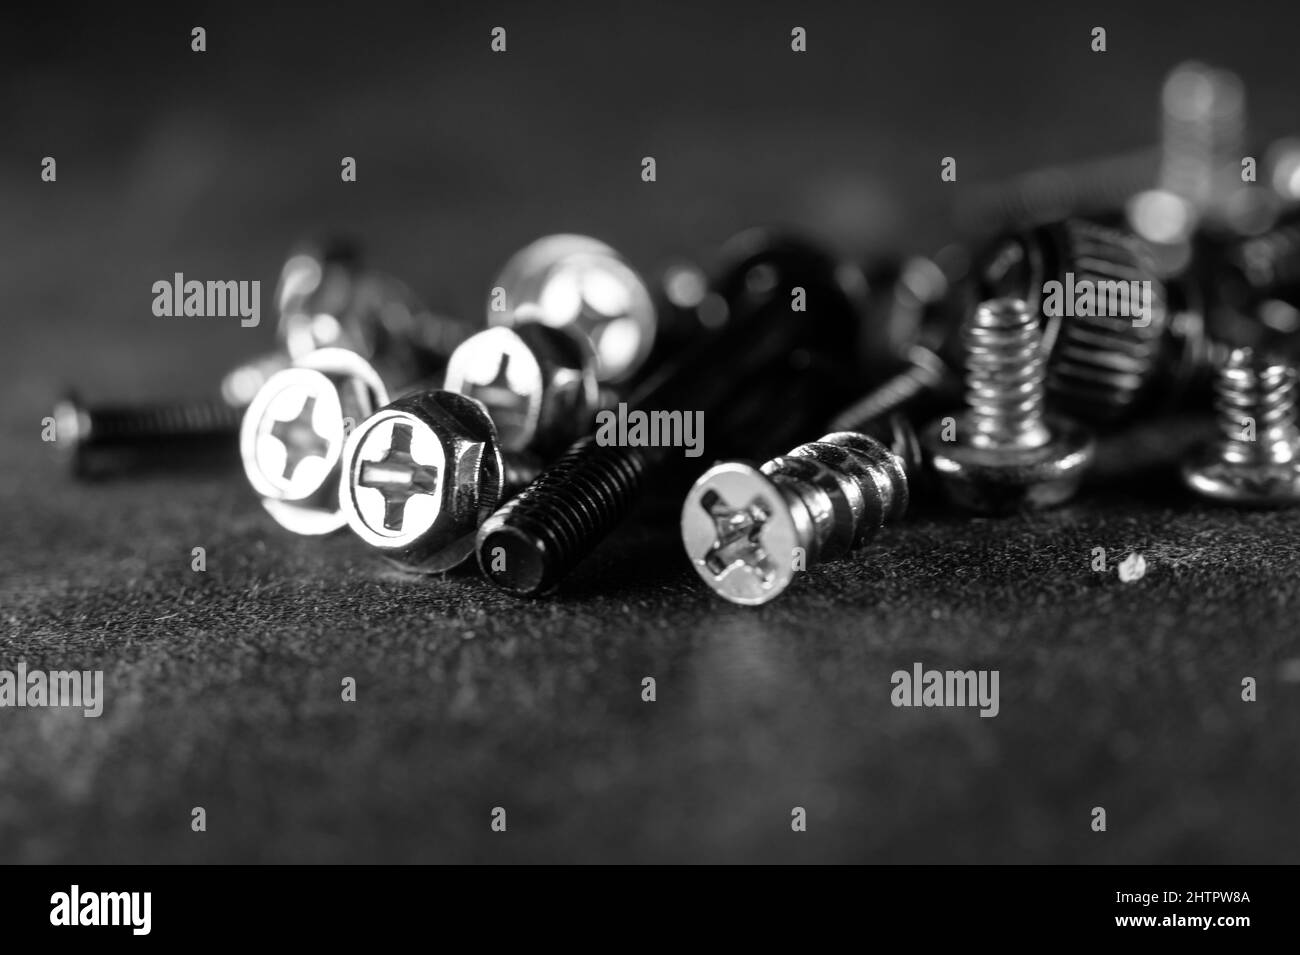 Grayscale shot of screws Stock Photo